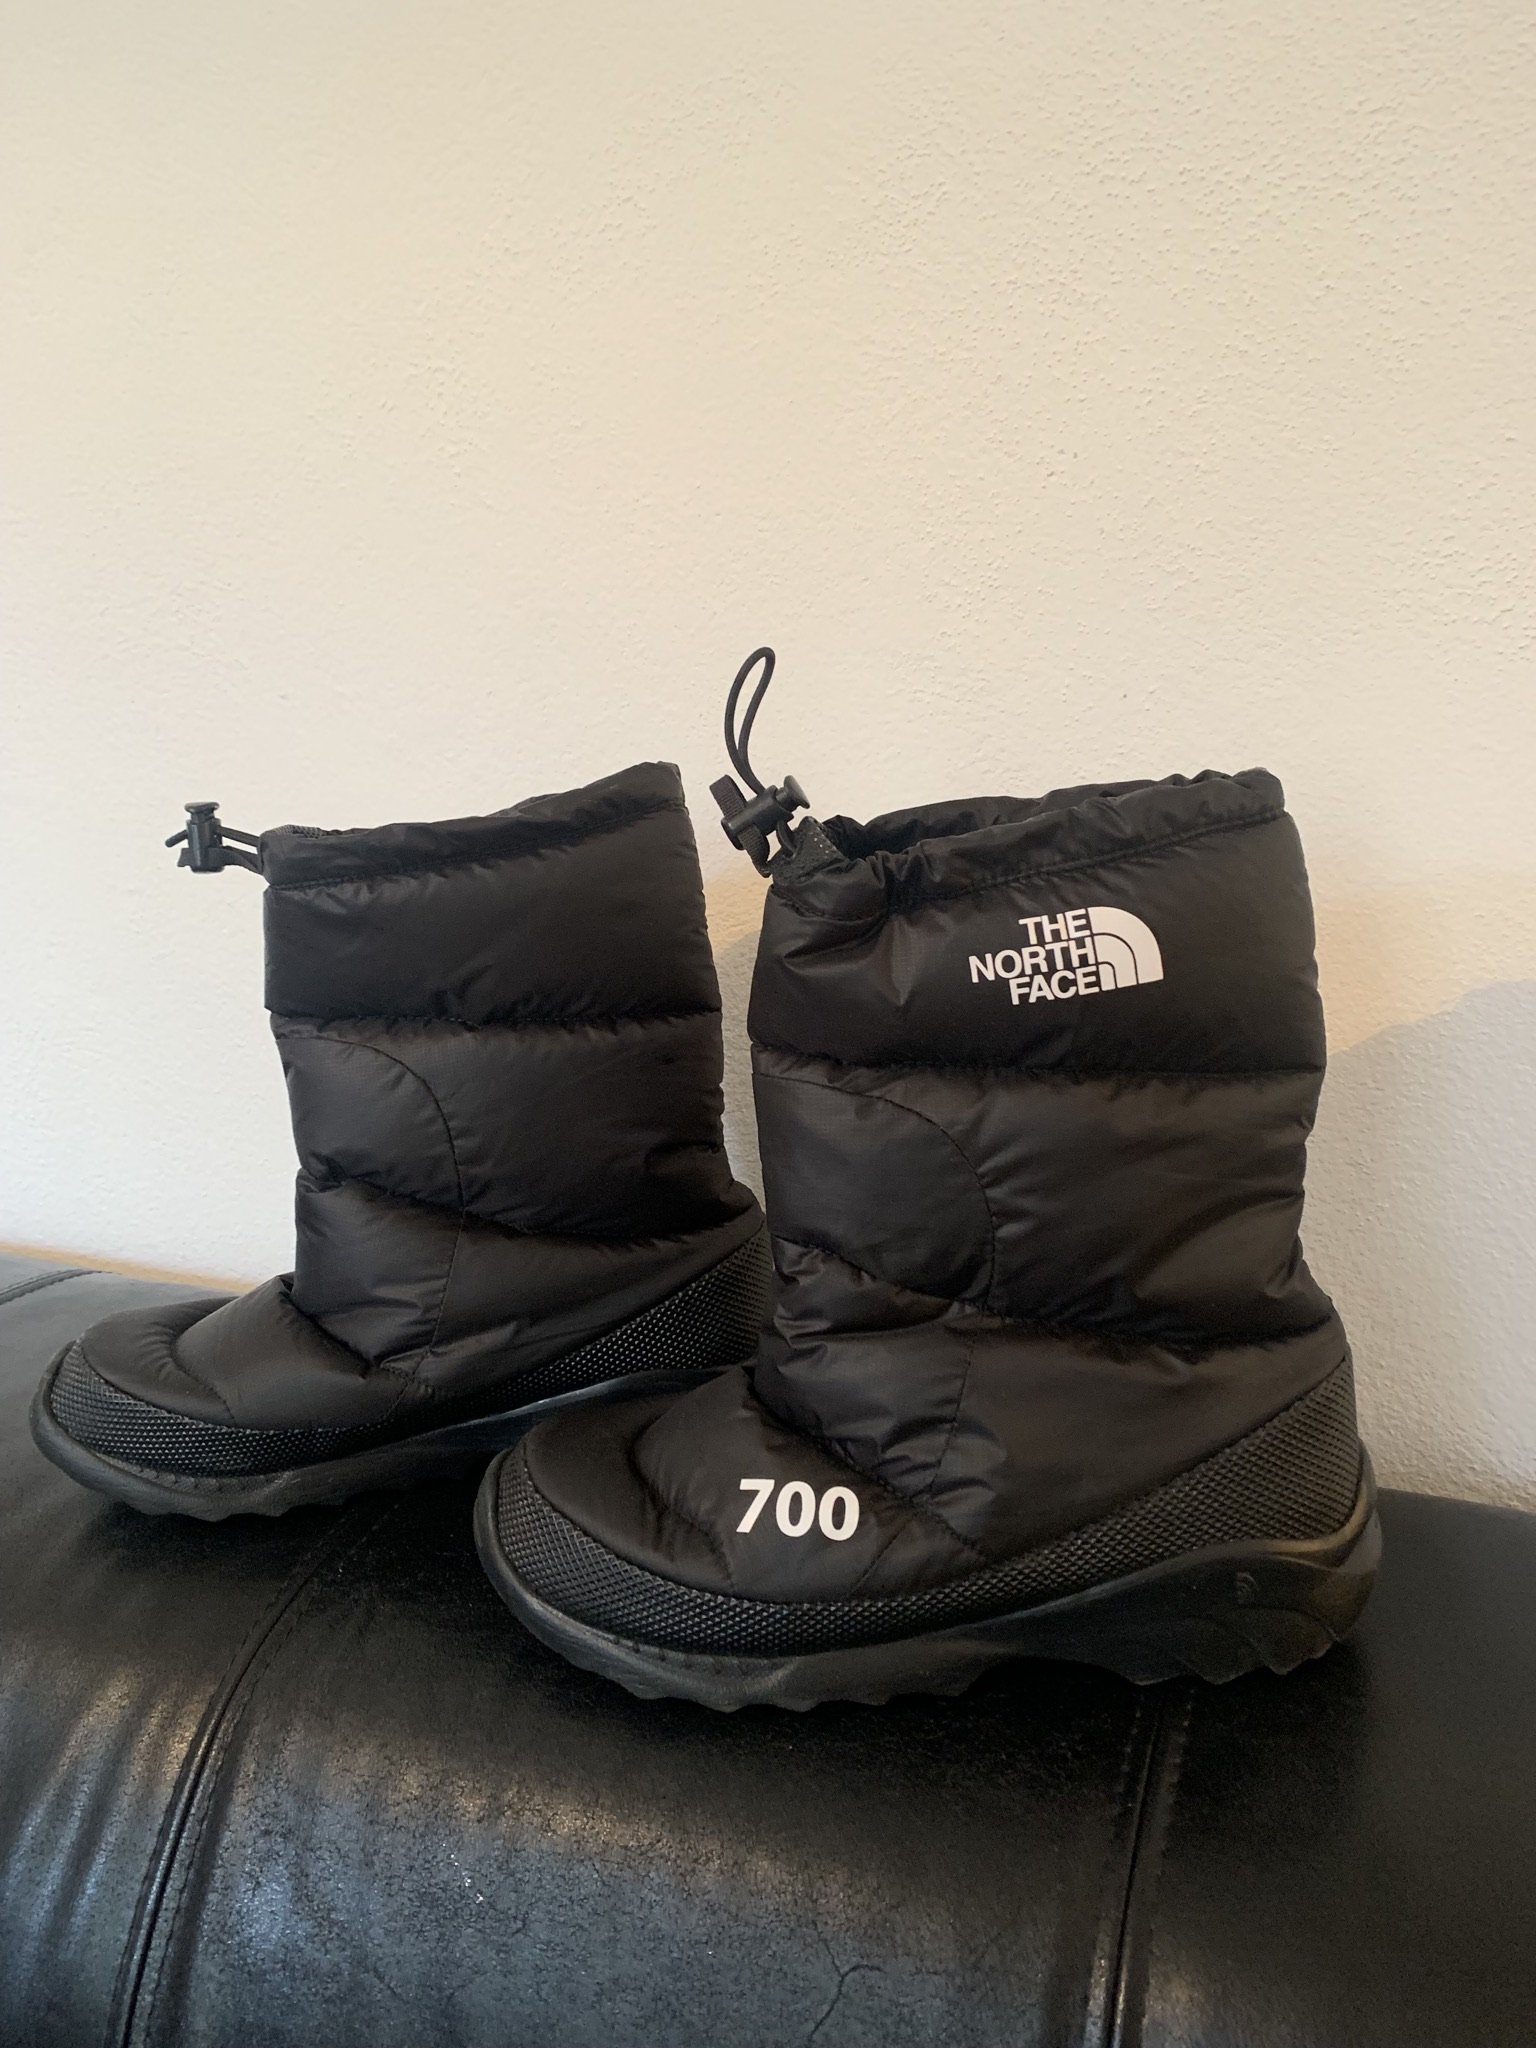 The North Face støvler, 500 kr.